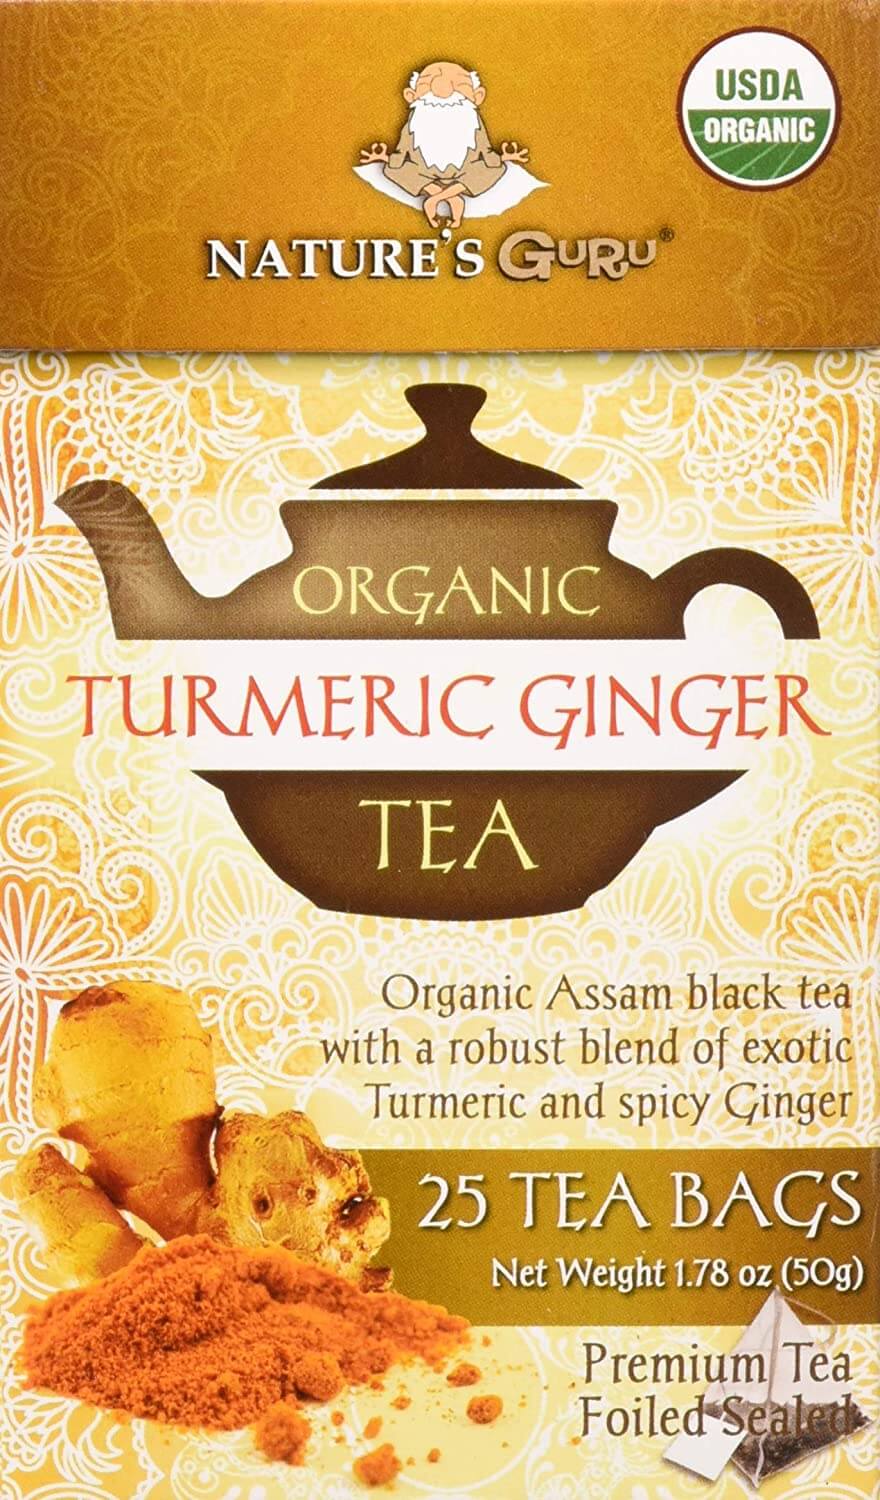 Nature's Guru Organic Whole Leaf Black Tea Turmeric Ginger